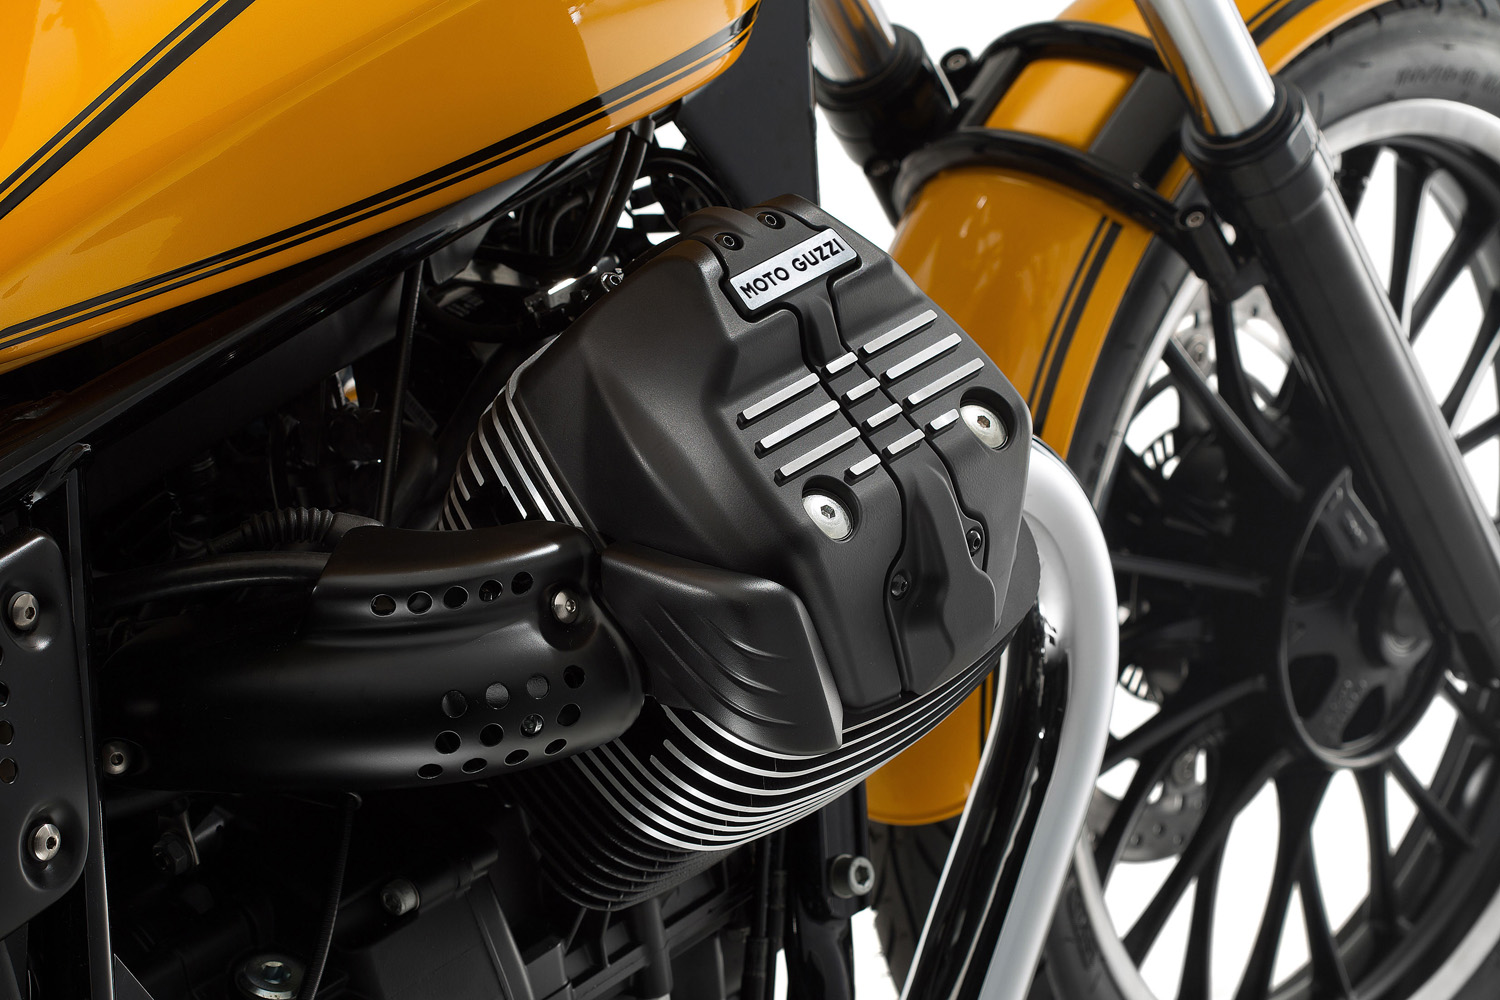 Moto Guzzi V9 Roamer engine